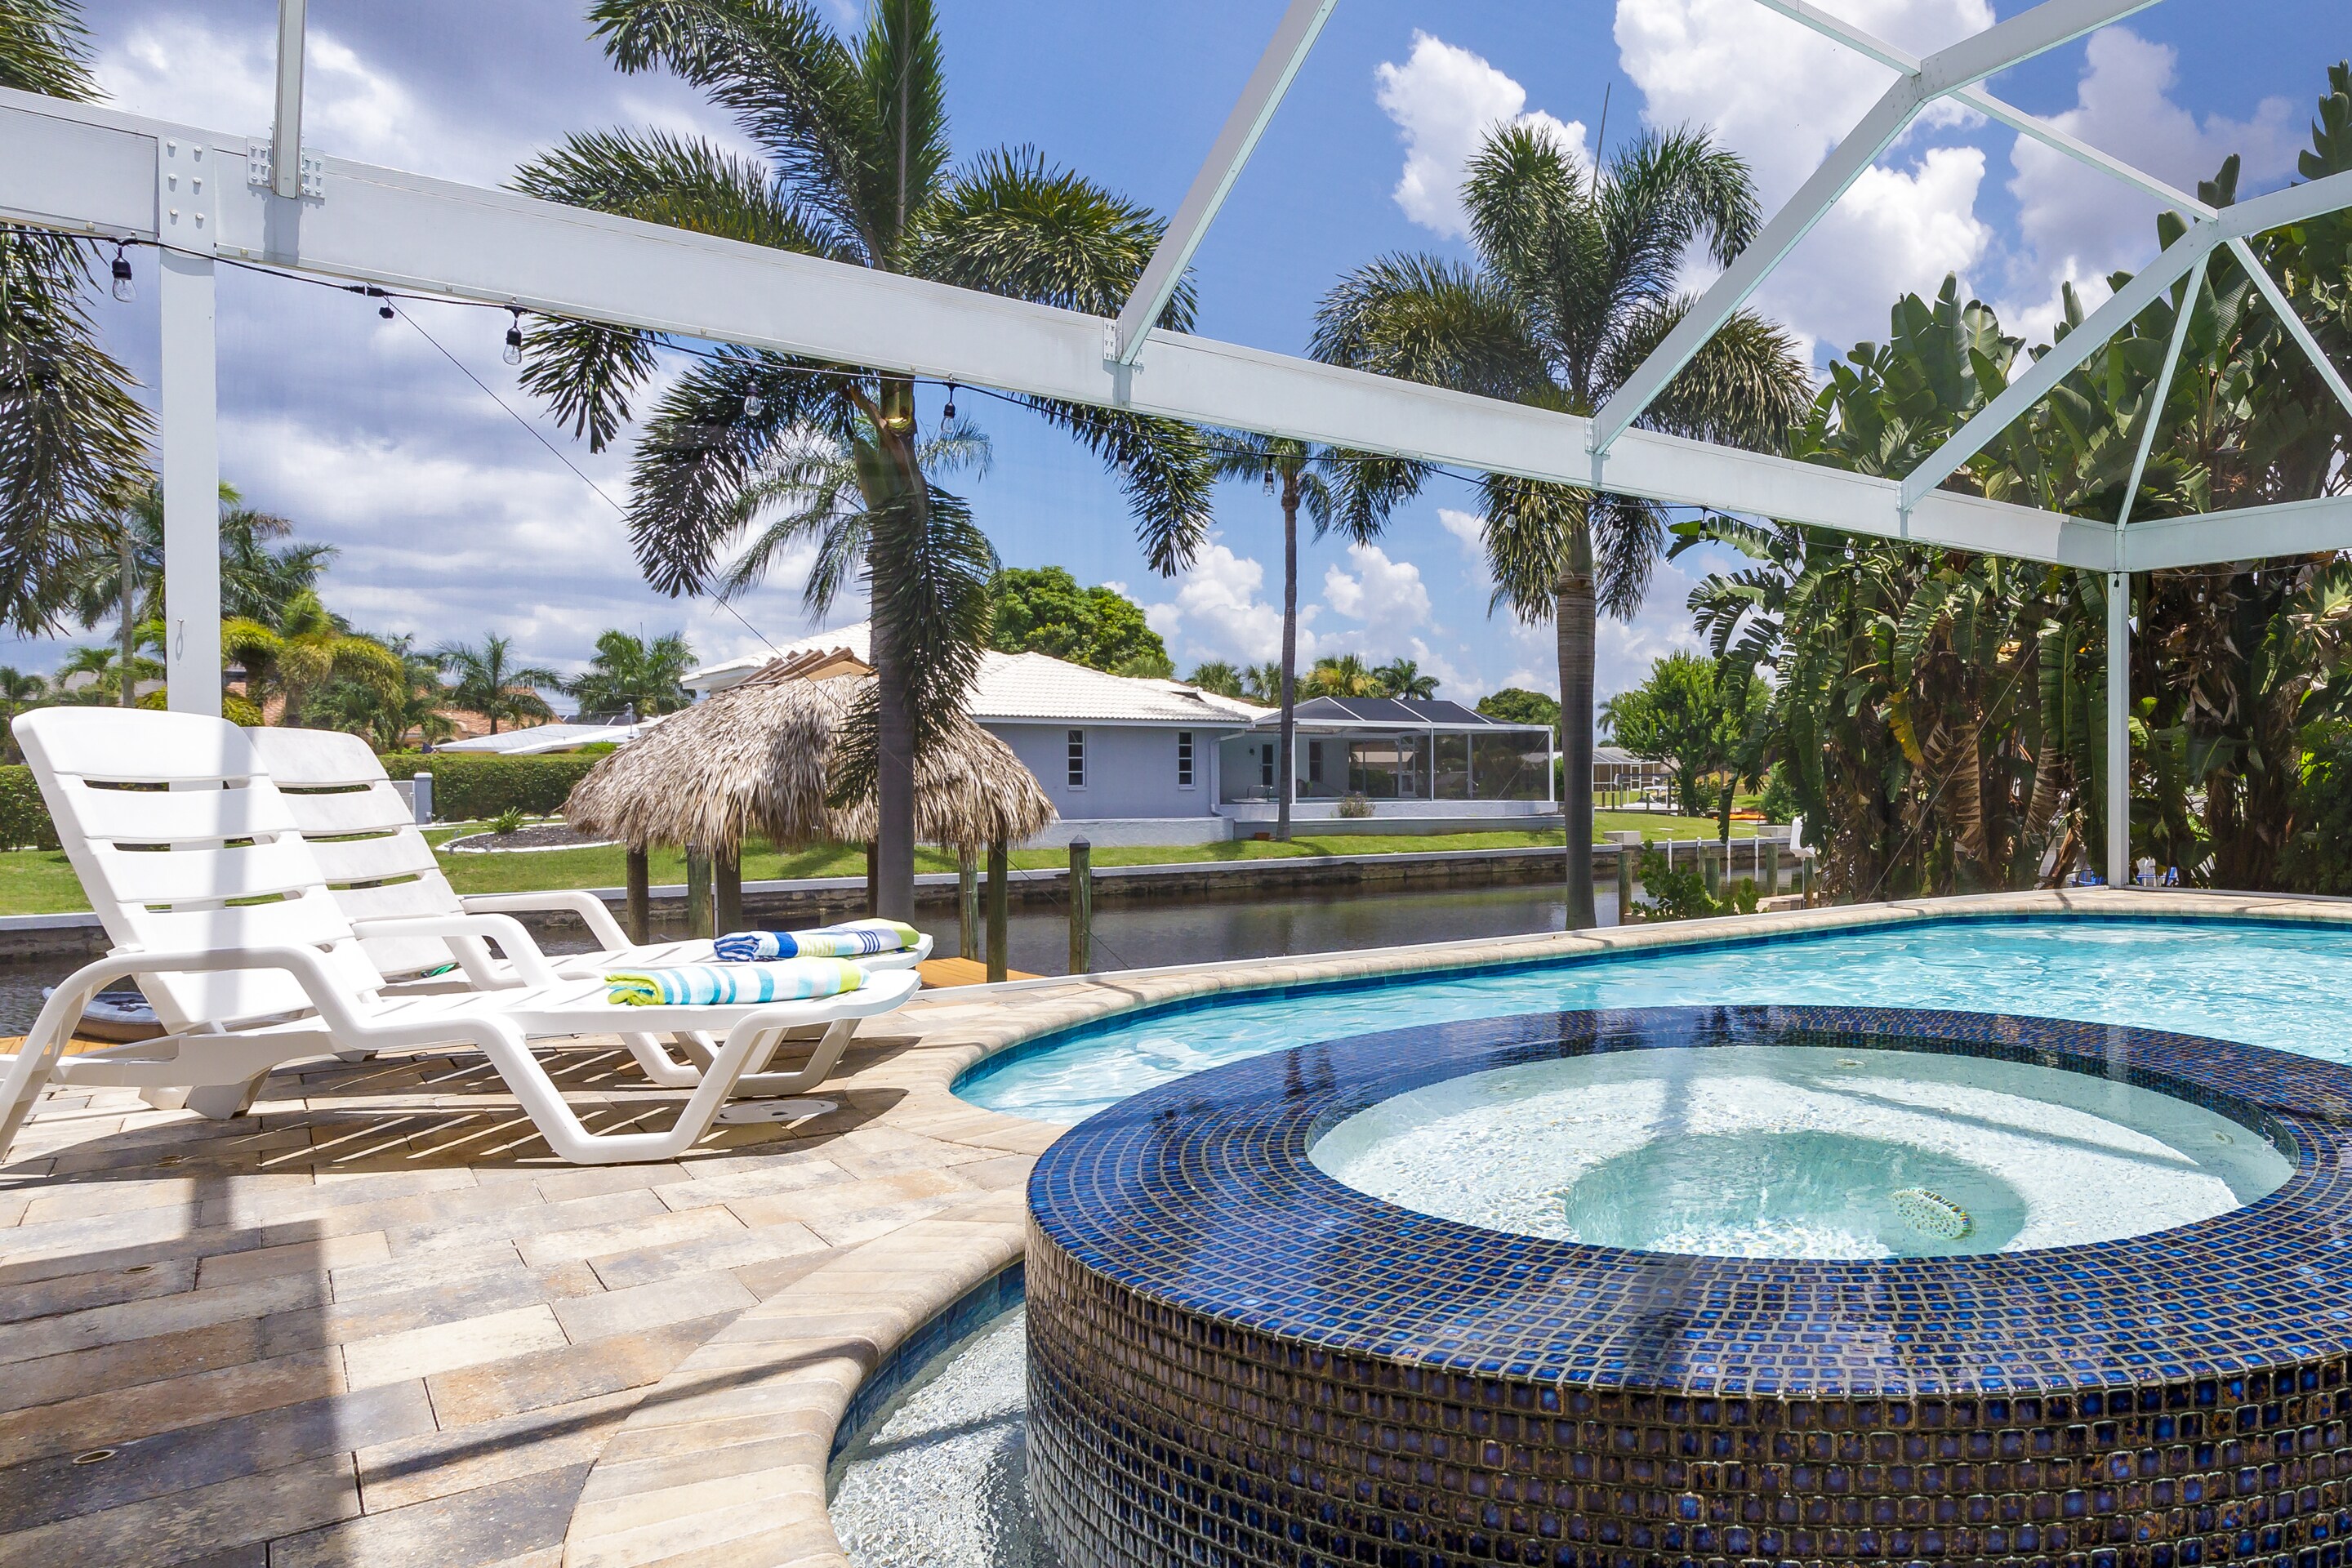 Property Image 2 - Villa Changes in Attitude, Cape Coral